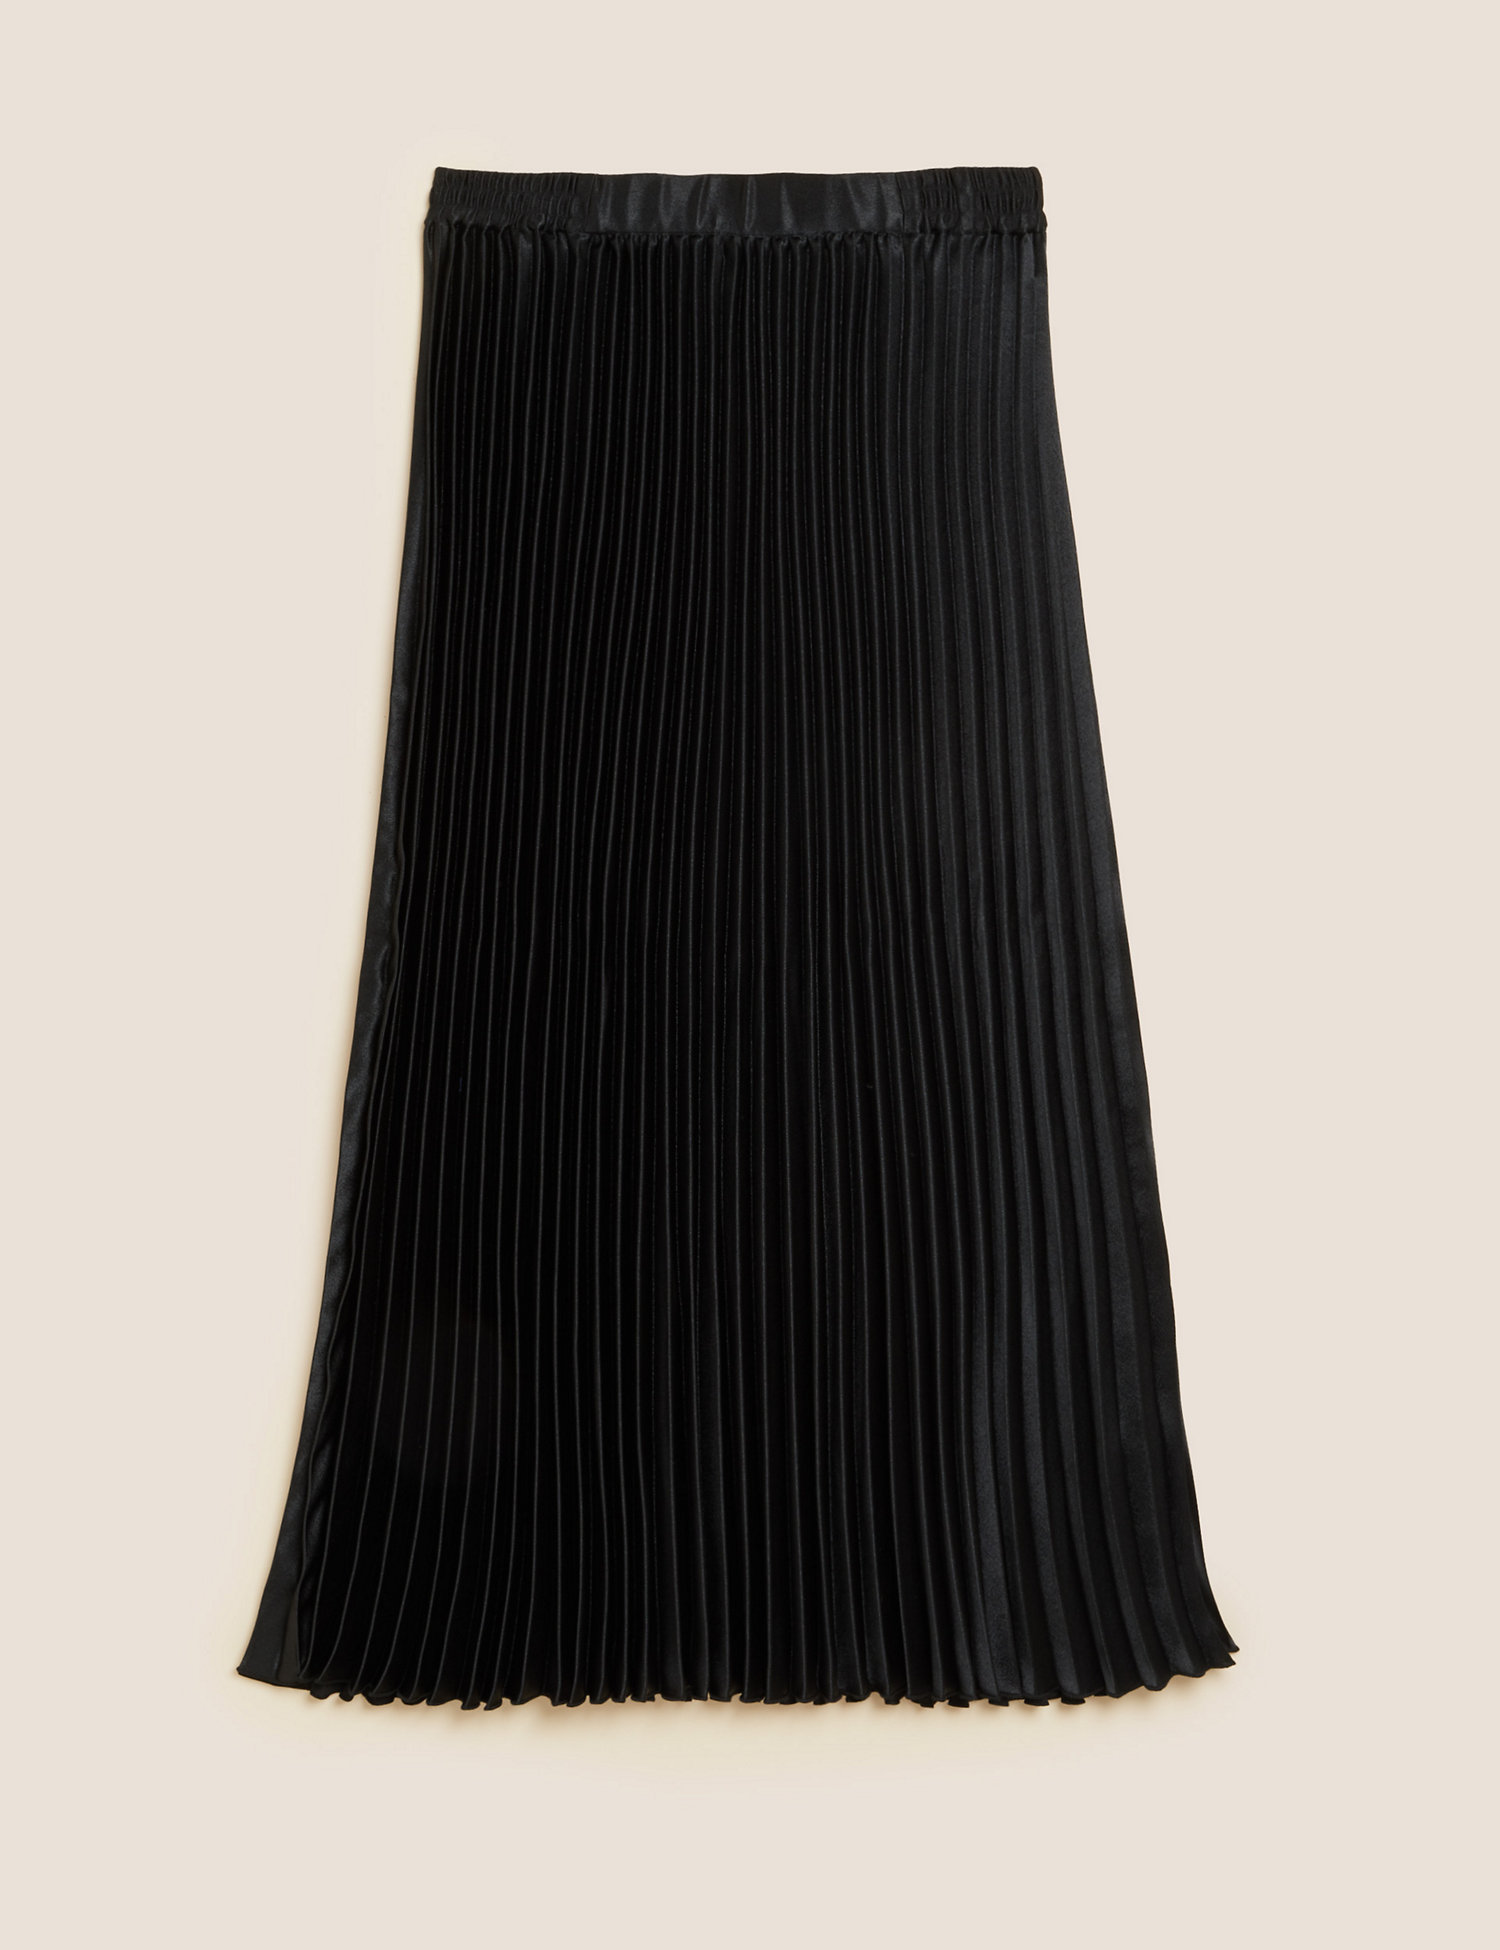 Атласная юбка Midaxi со складками M&S Collection